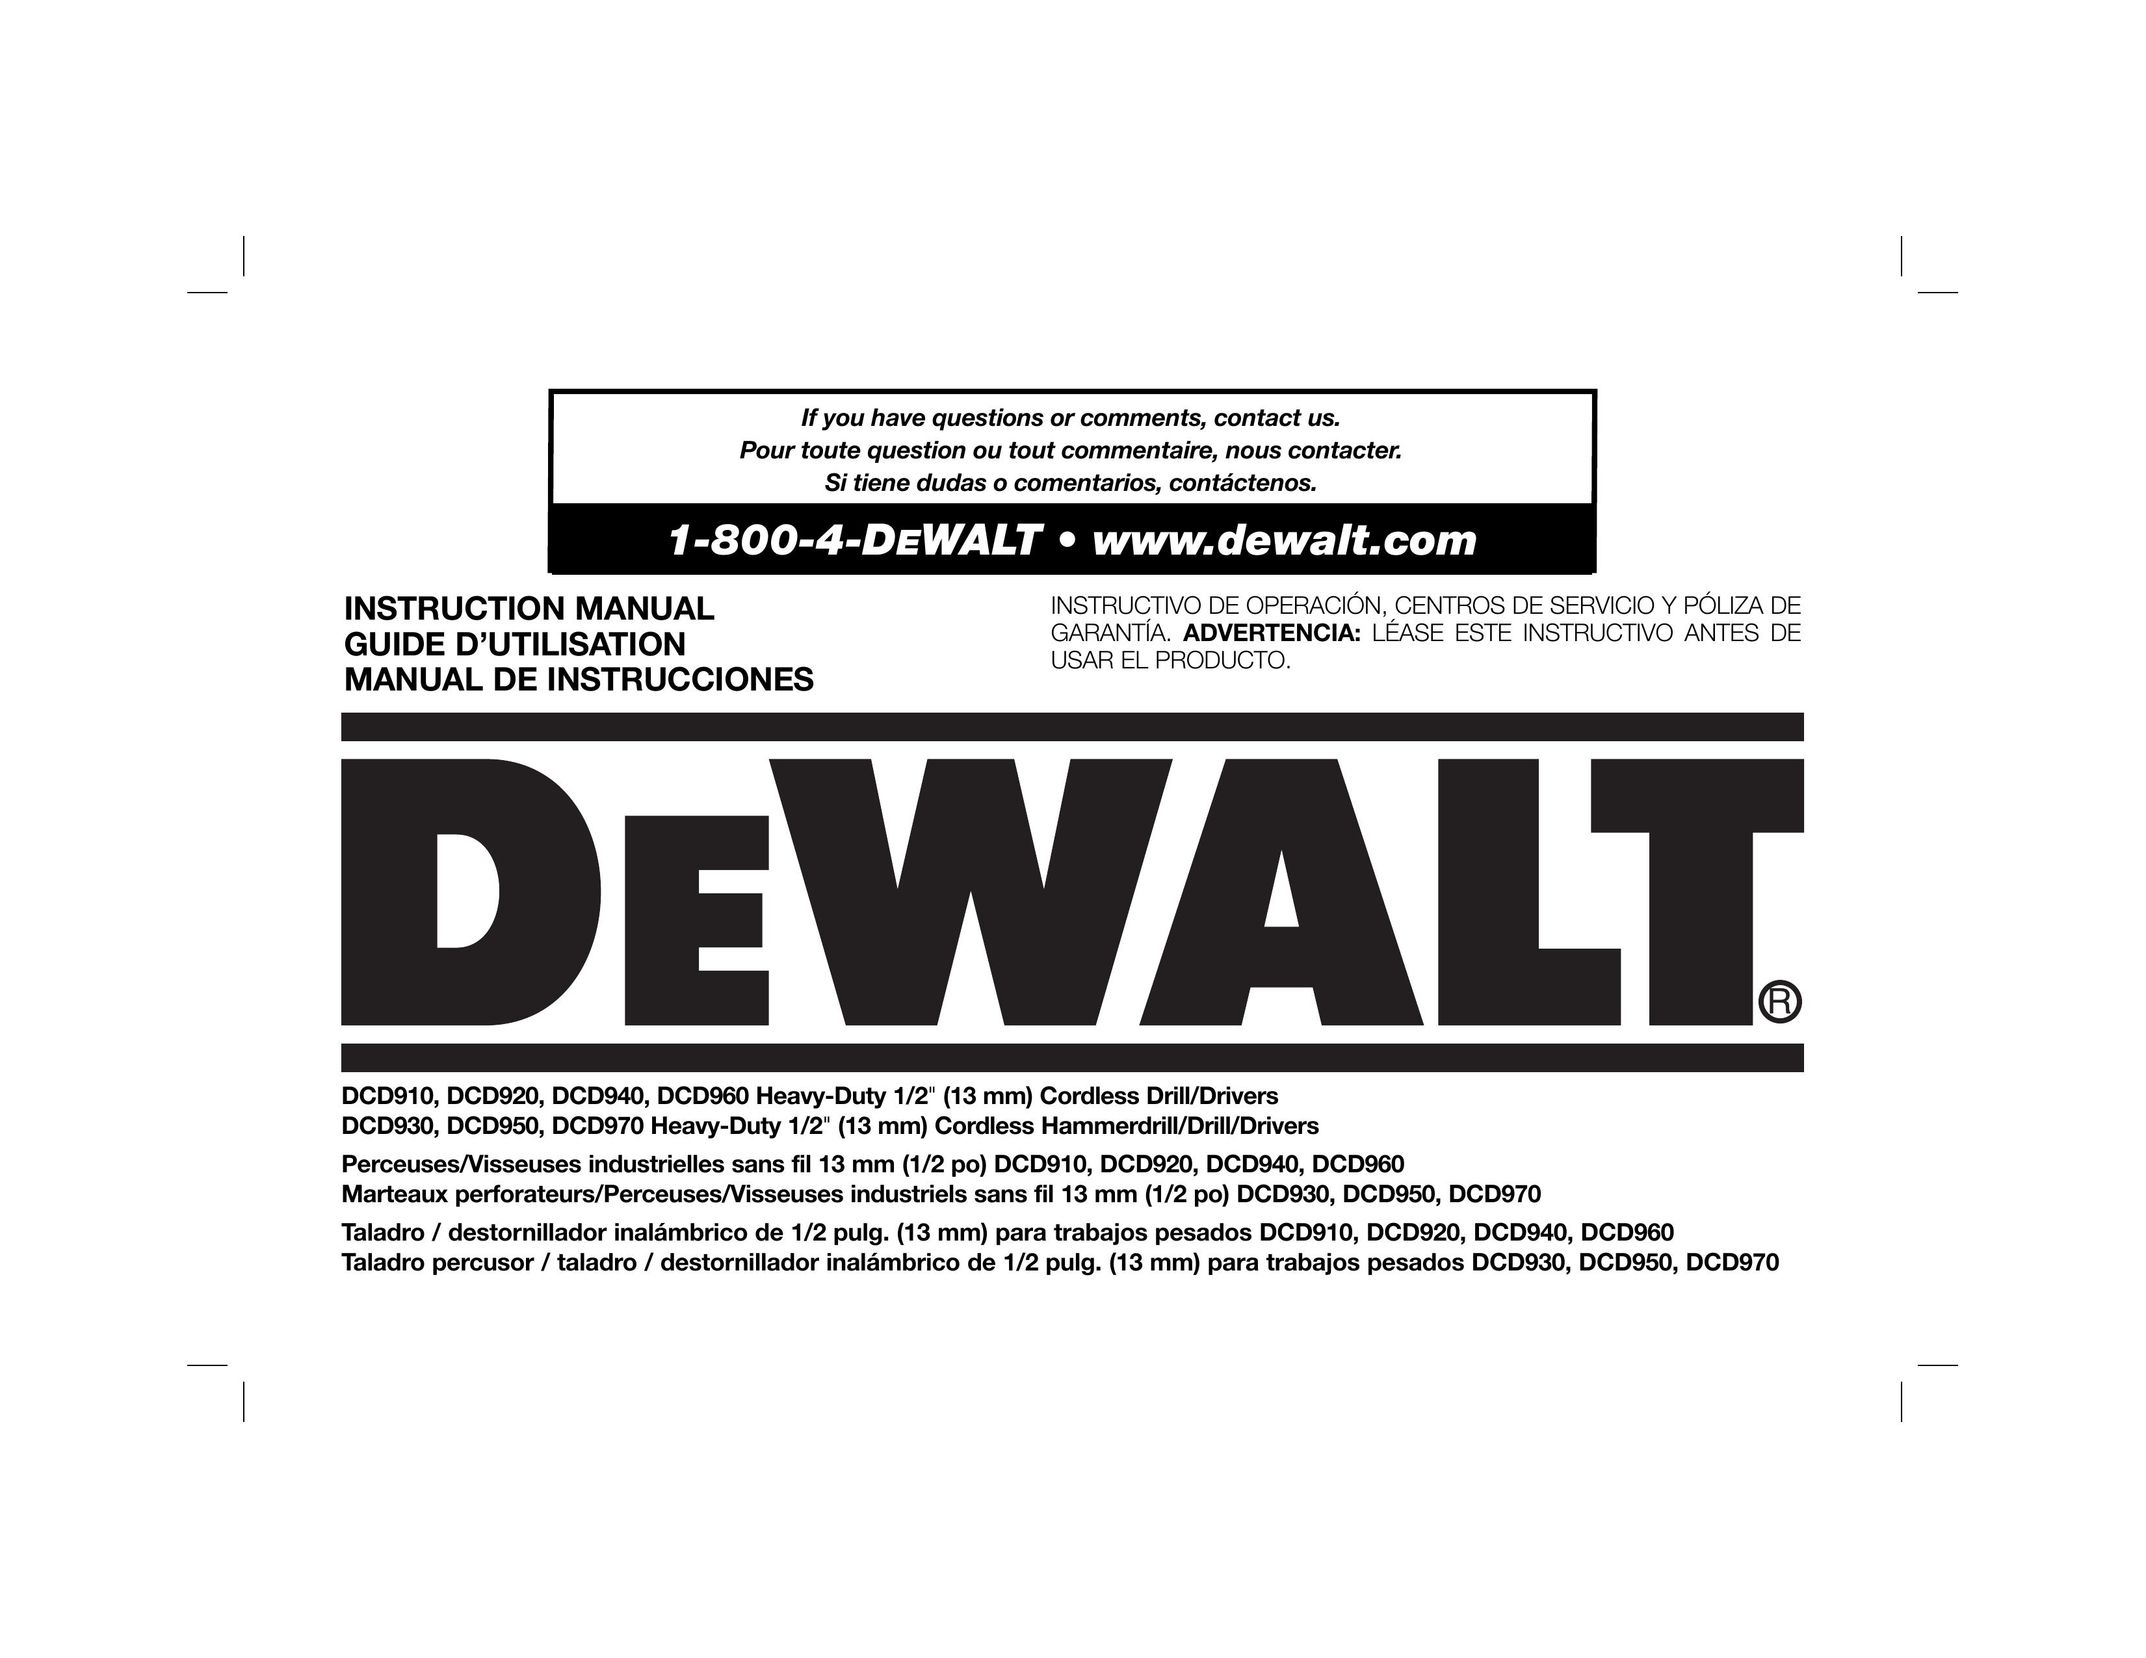 DeWalt DCD950 Cordless Drill User Manual